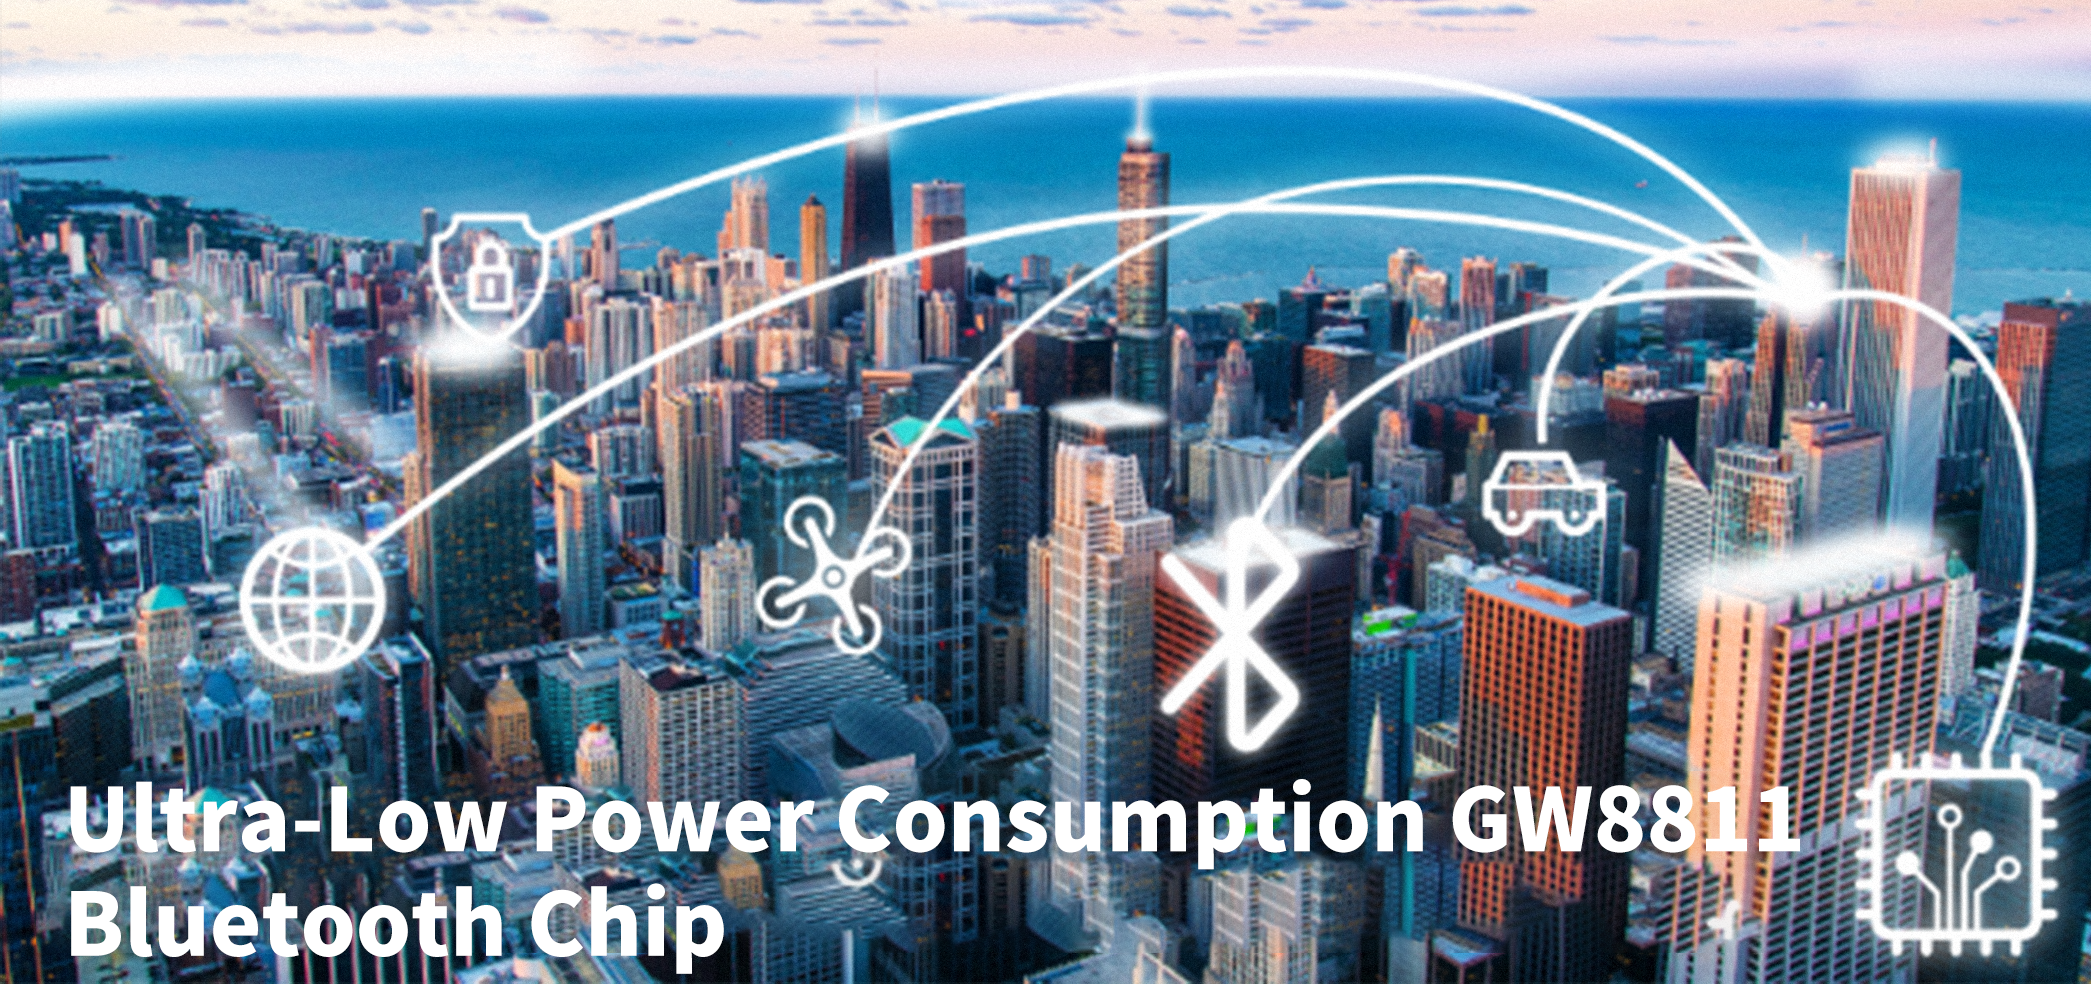 Ultra-Low Power Consumption GW8811 Bluetooth Chip